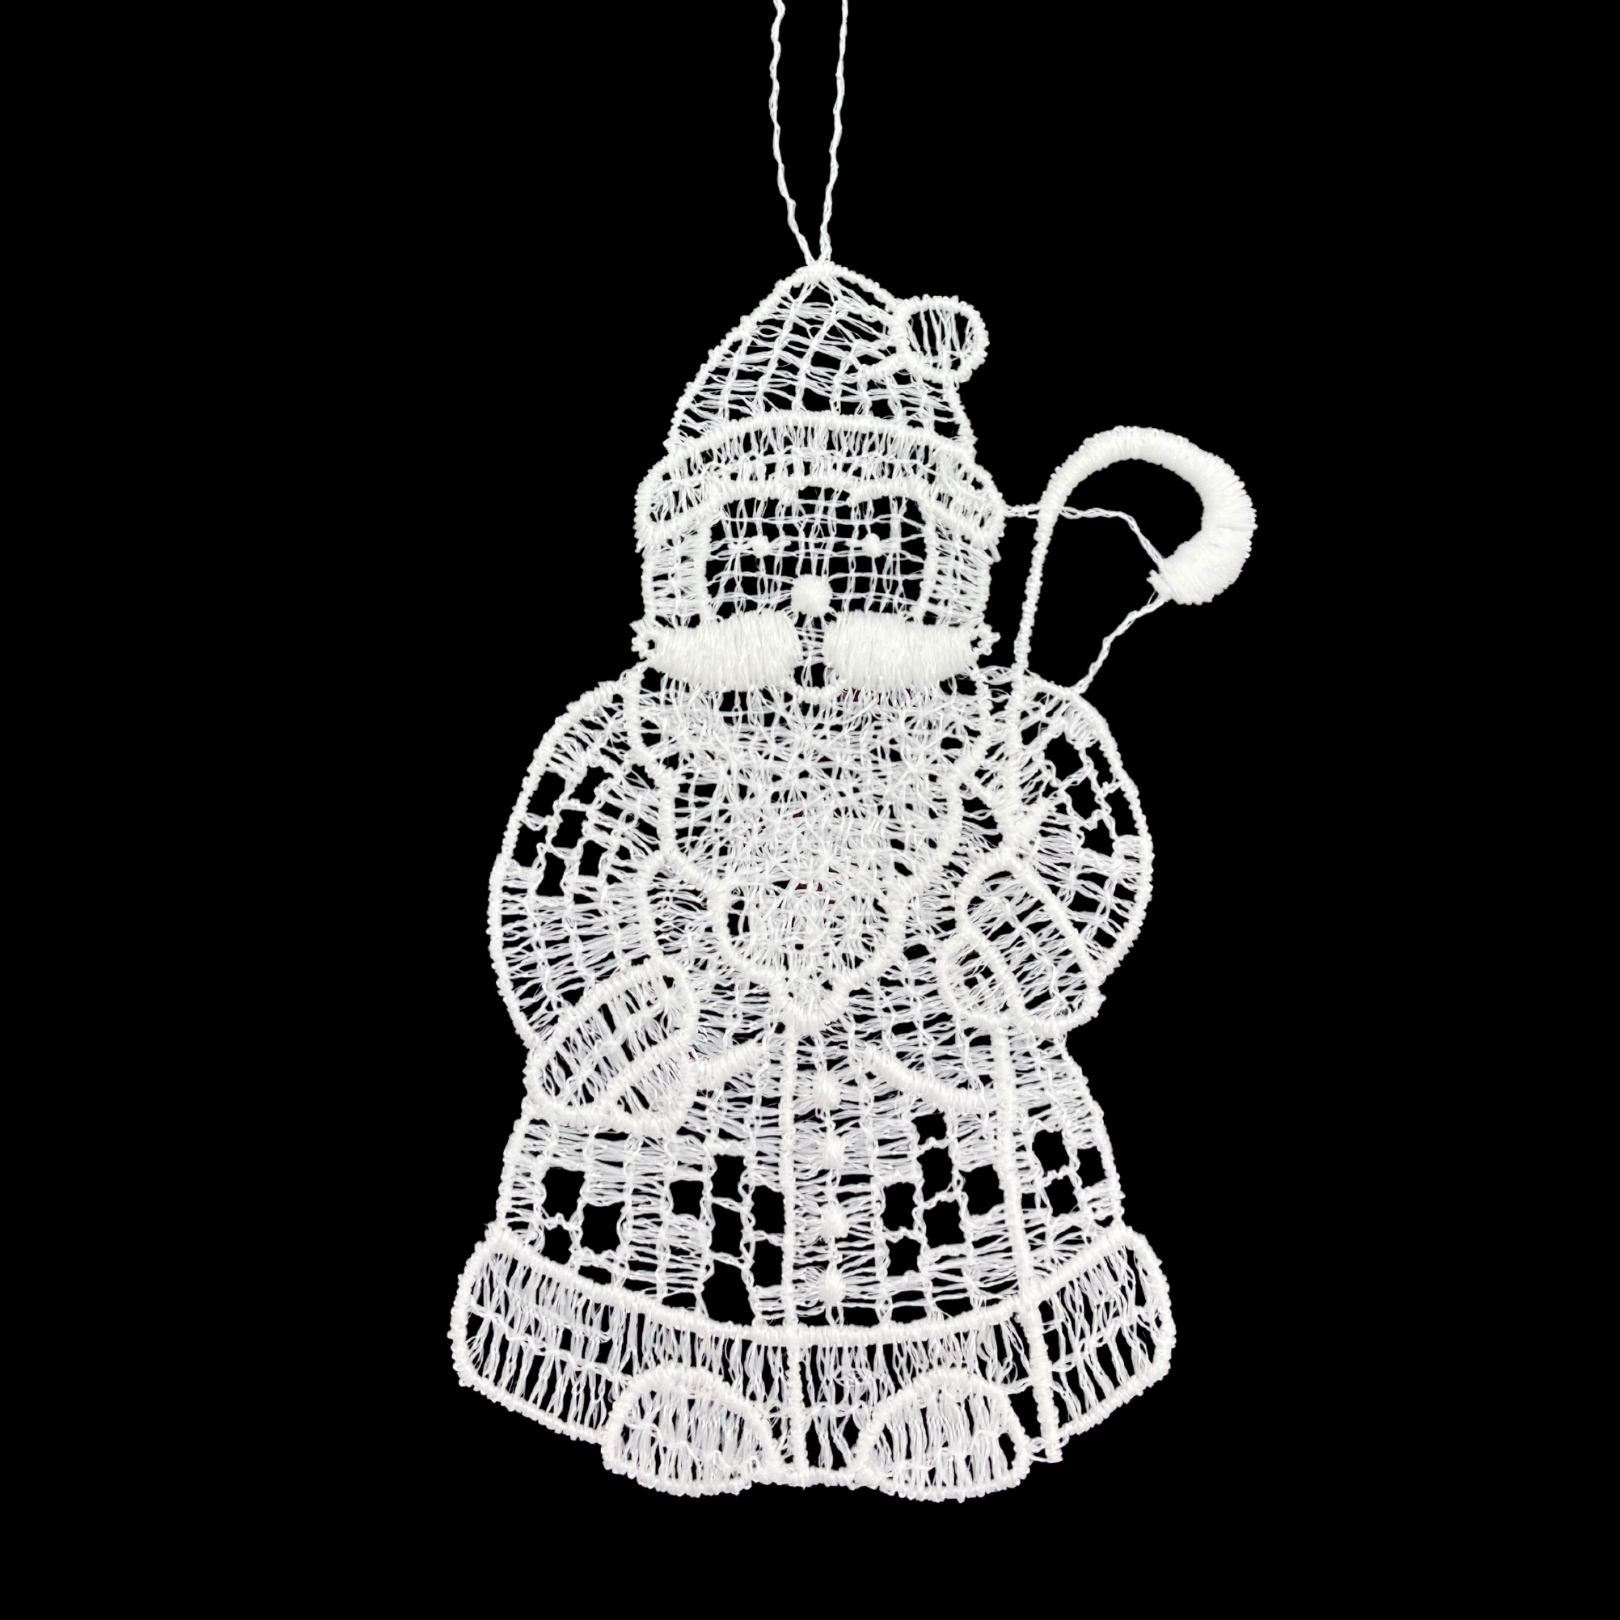 Lace Santa Claus Ornament by StiVoTex Vogel